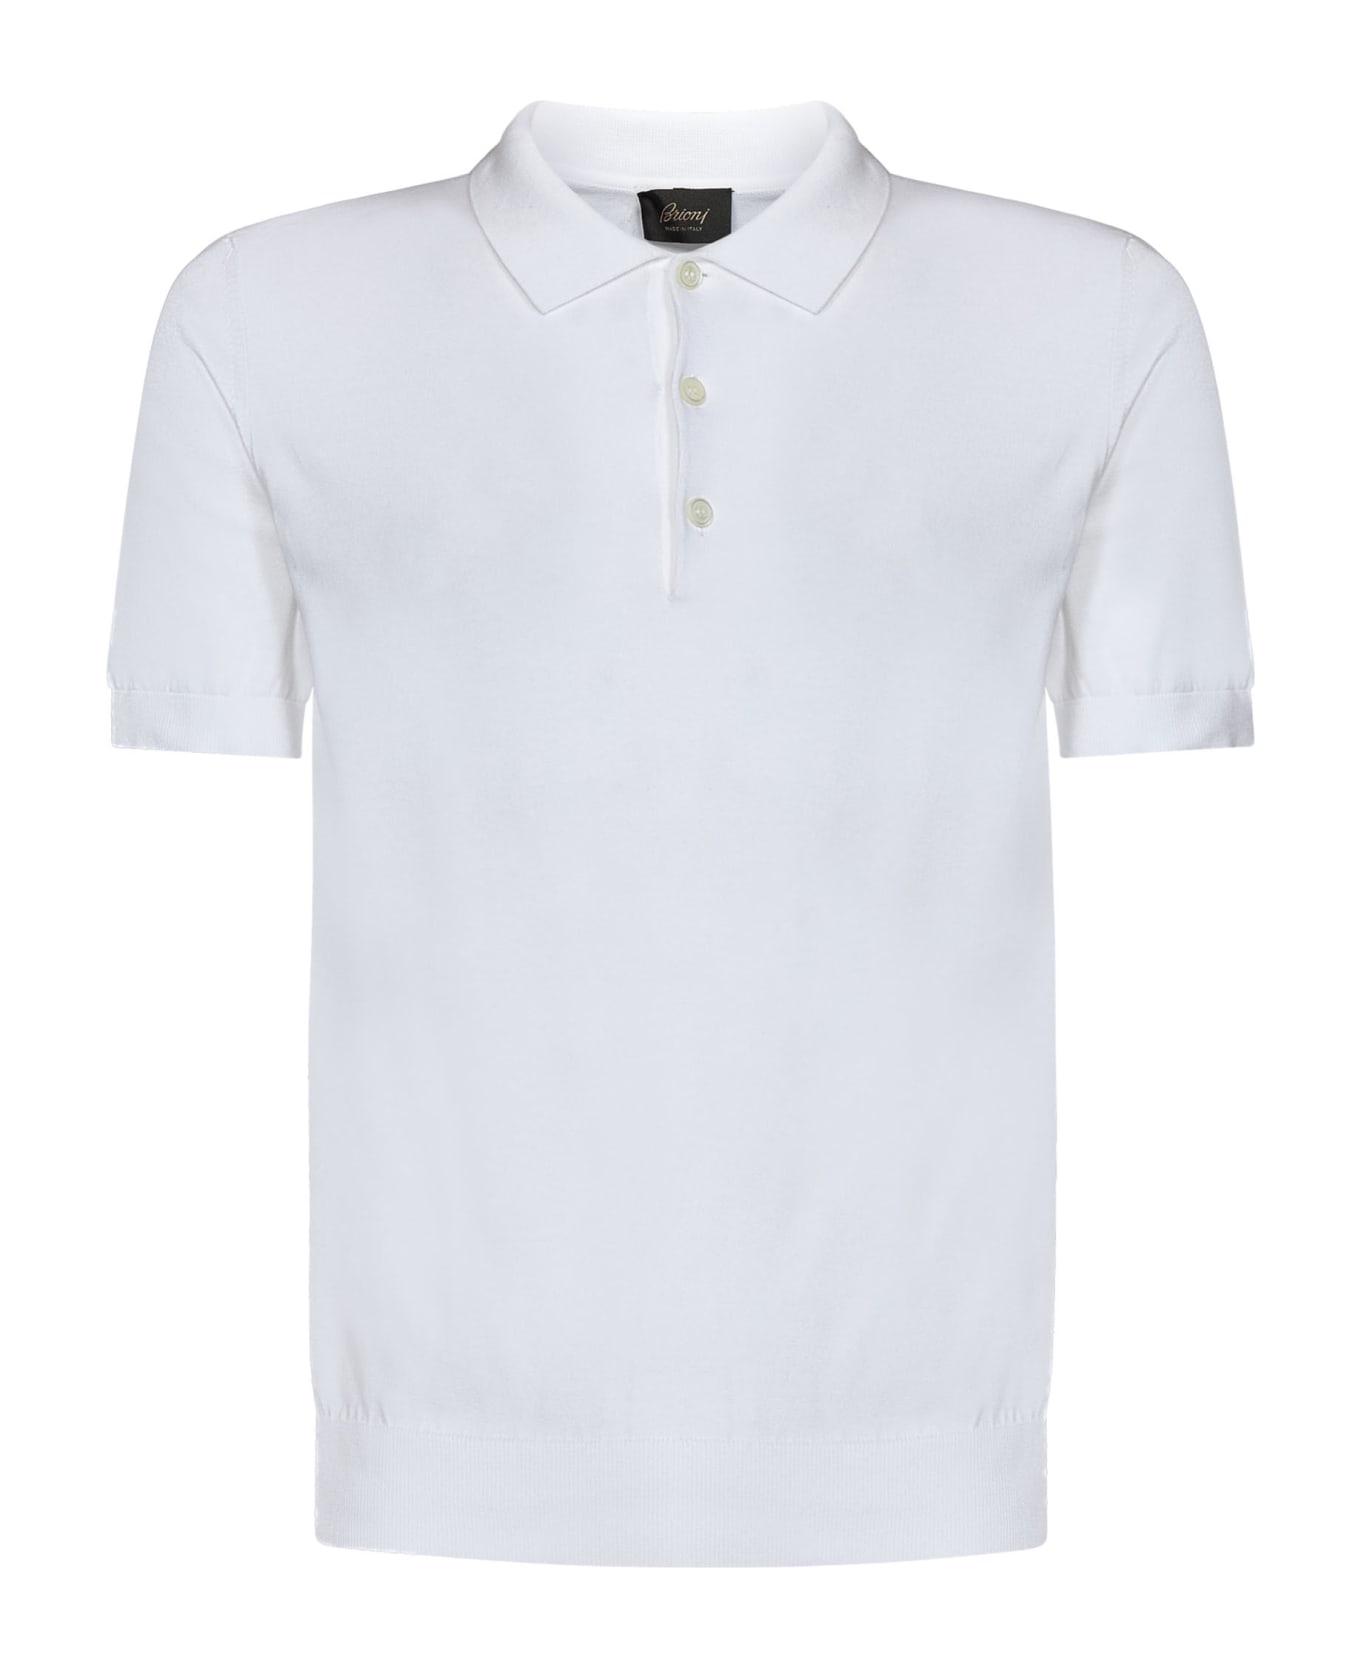 Brioni Polo Shirt - White